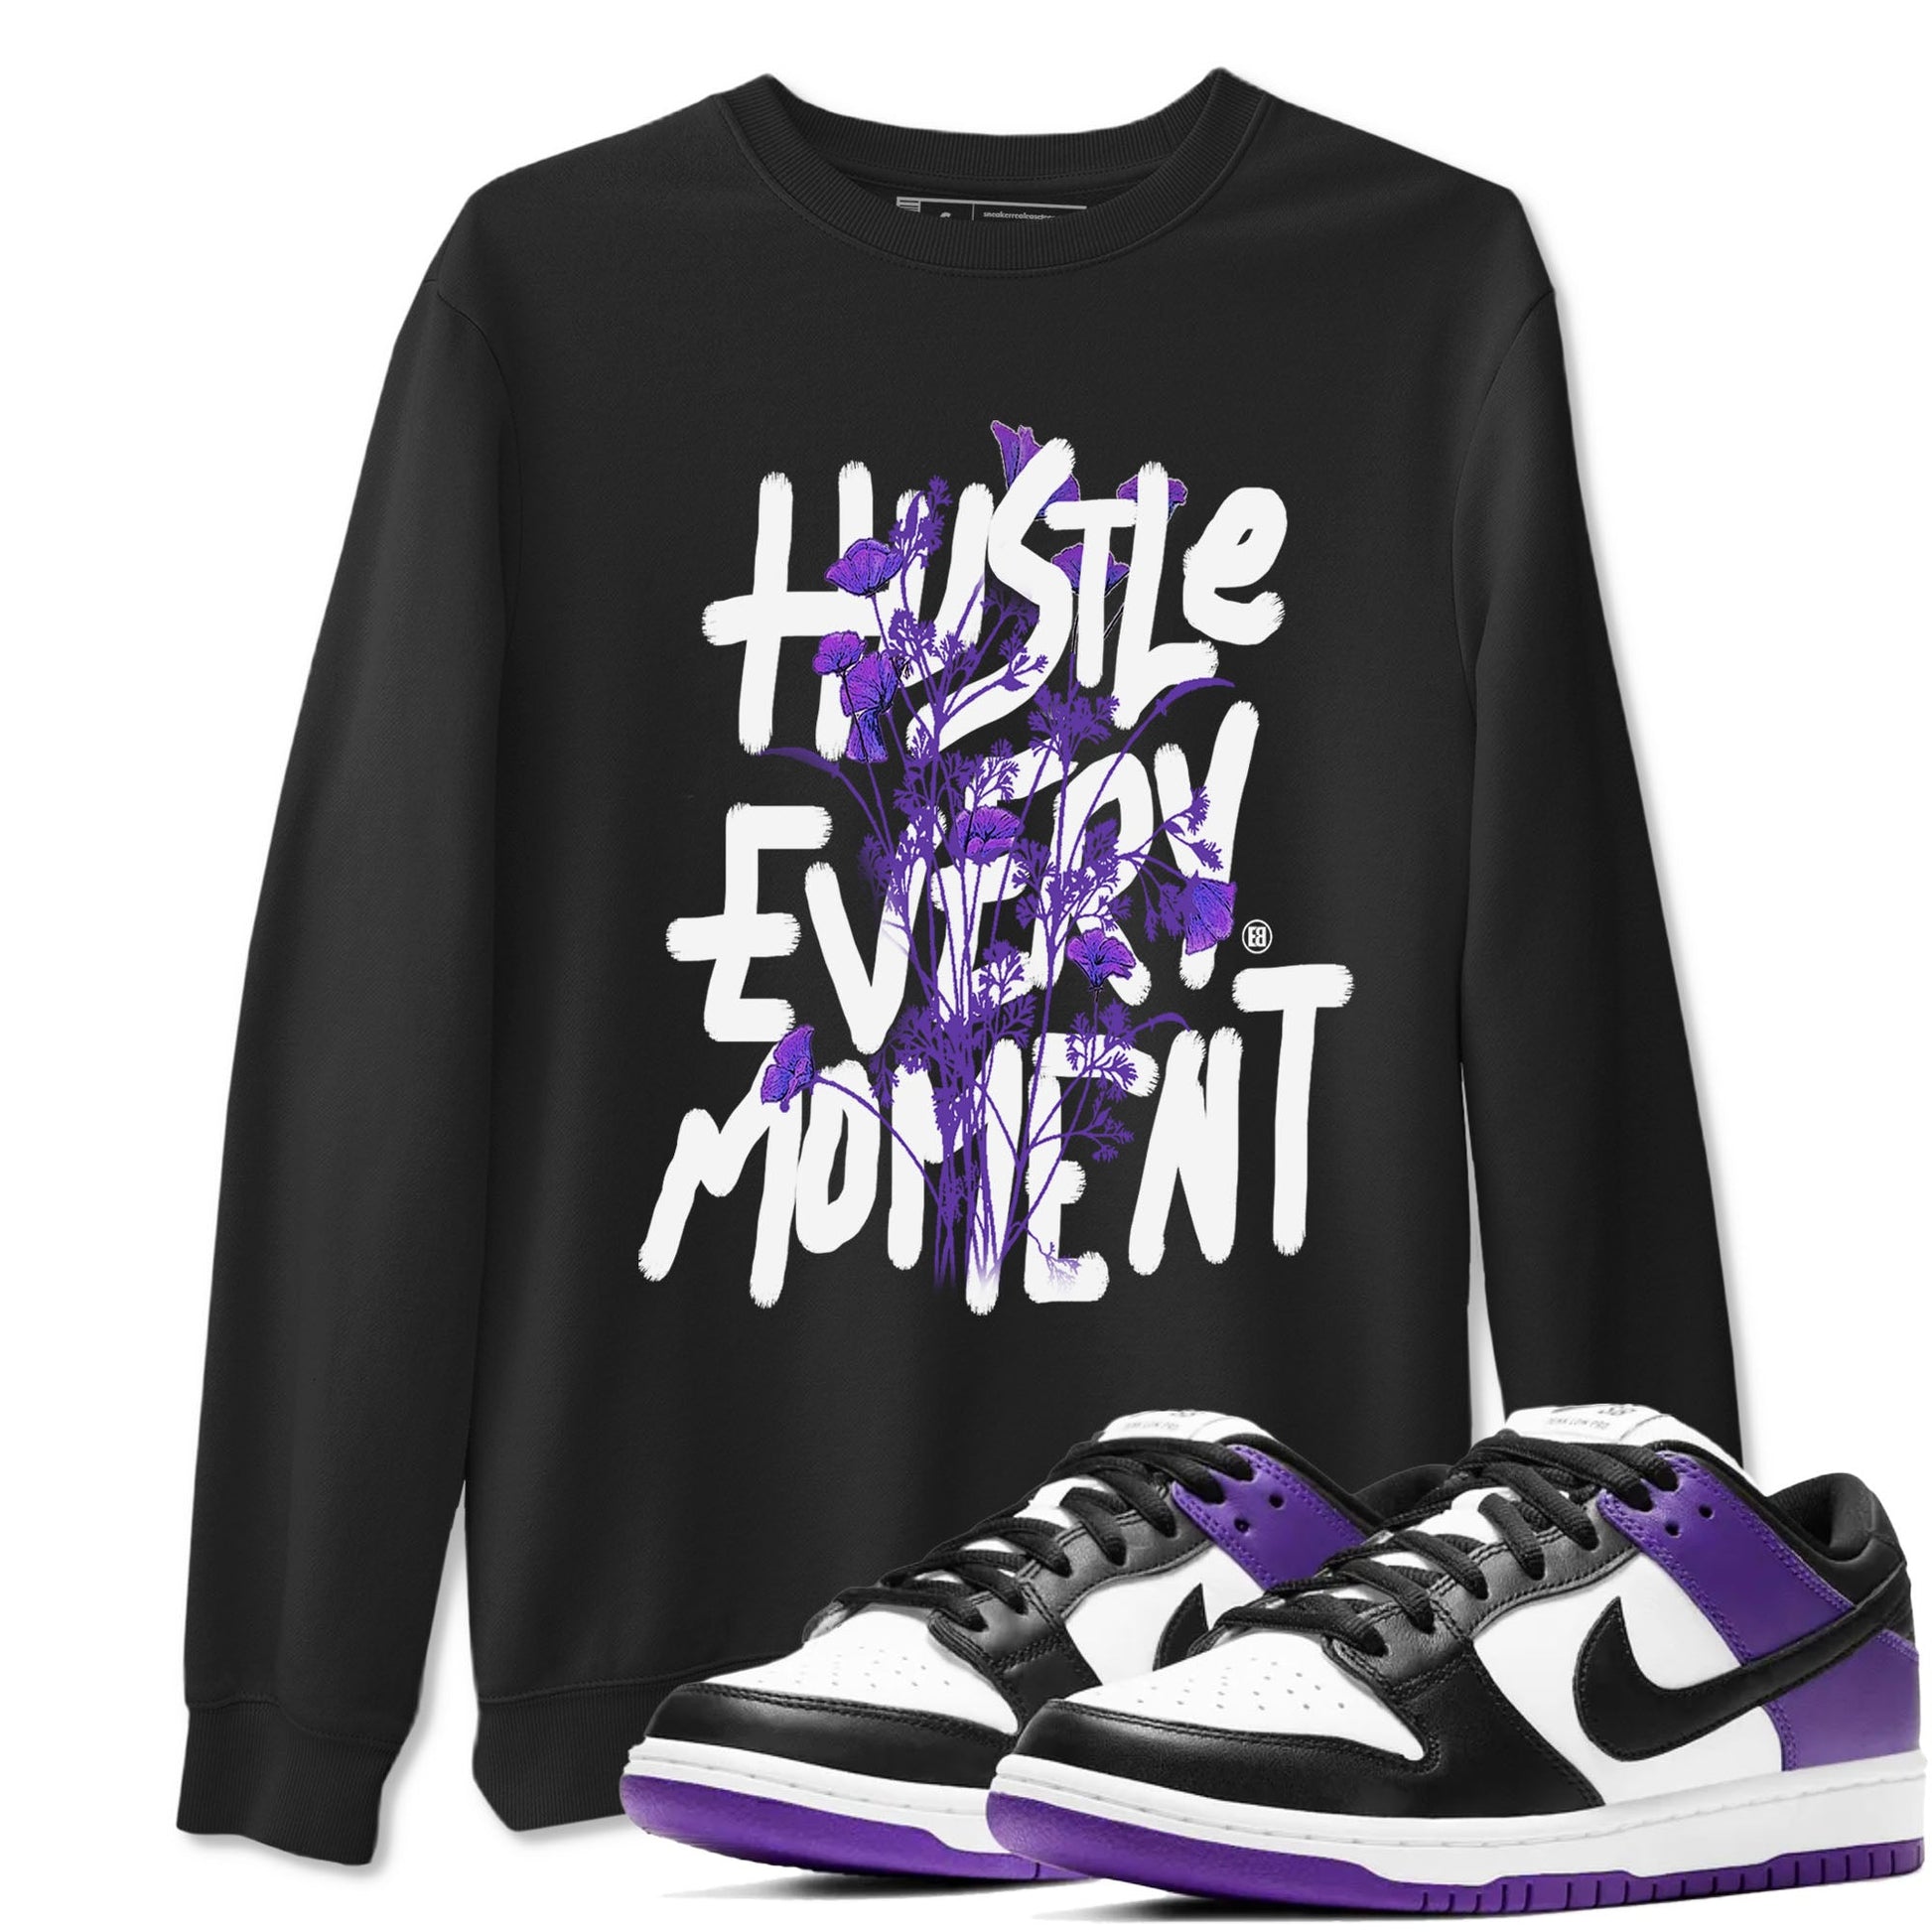 Hustle Every Moment sneaker match tees to Court Purple Dunks street fashion brand for shirts to match Jordans SNRT Sneaker Tees Dunk Low Court Purple unisex t-shirt Black 1 unisex shirt